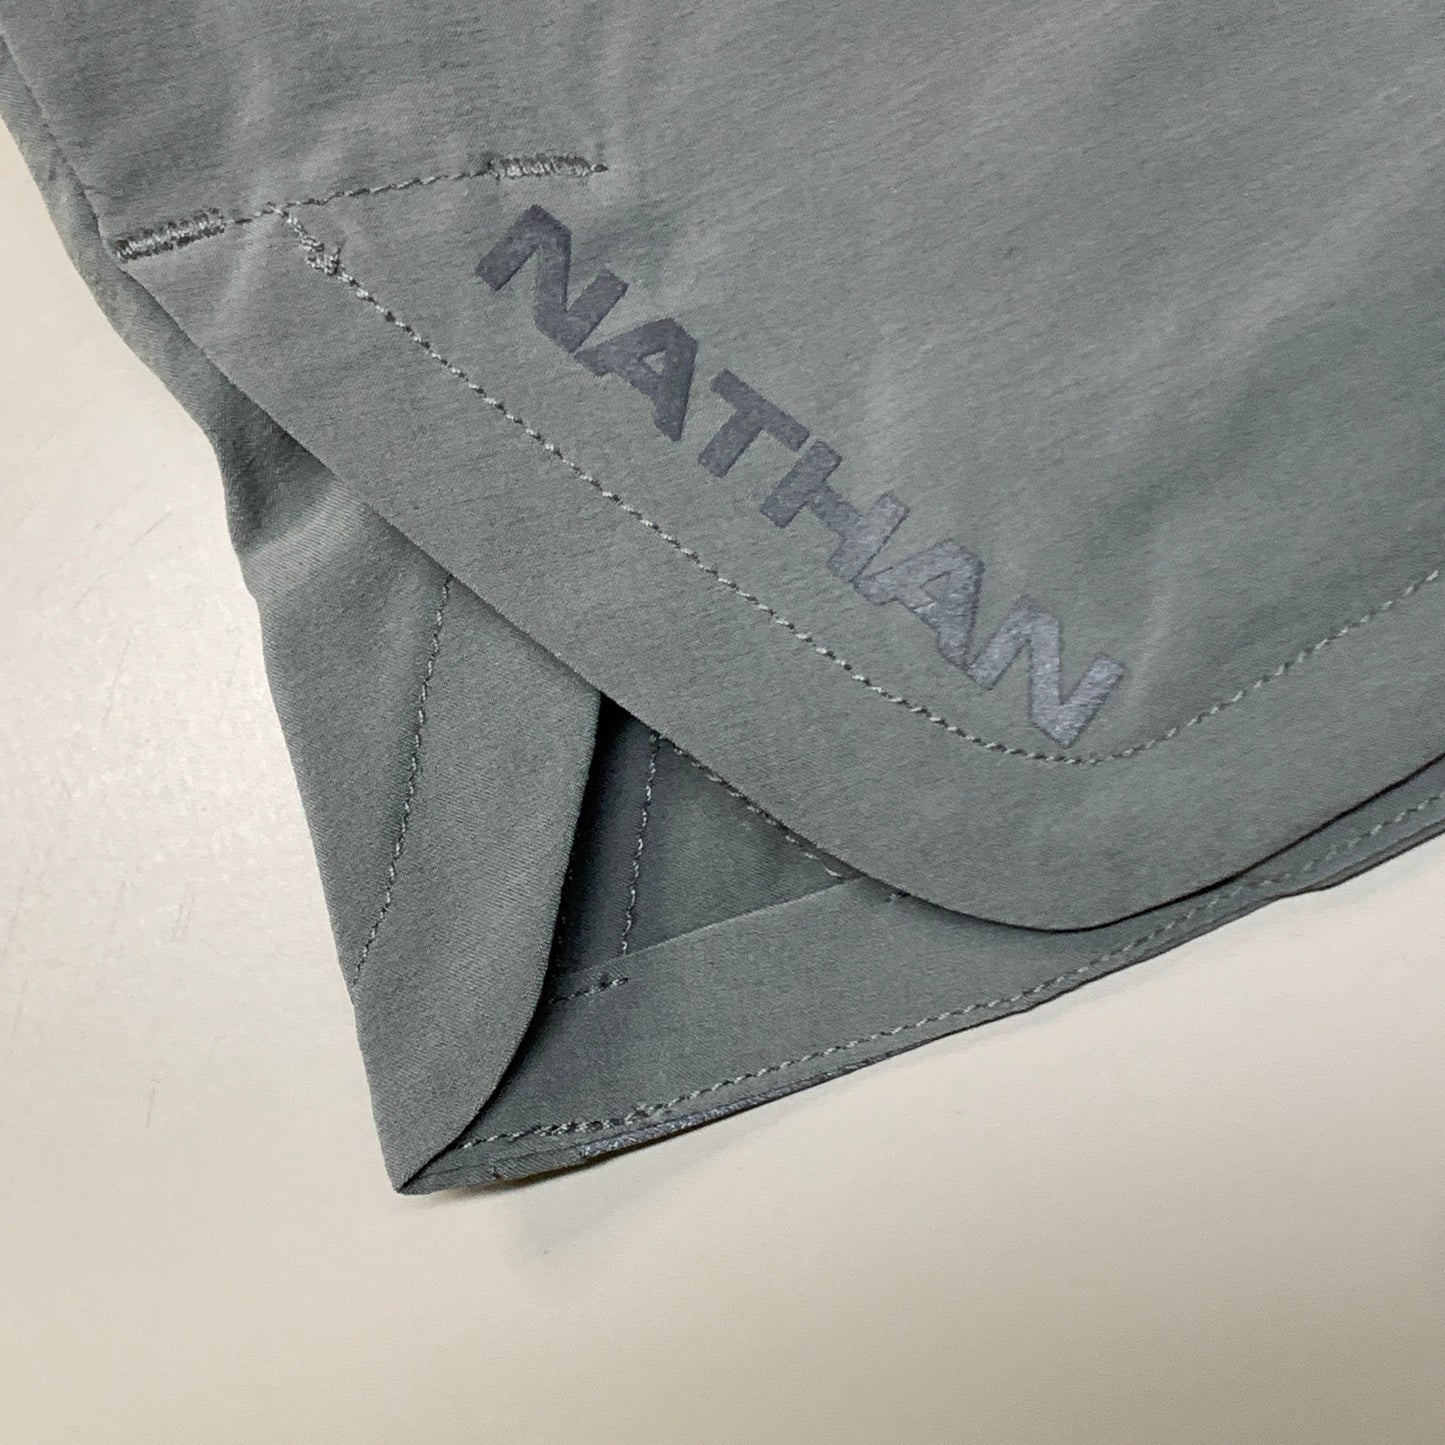 NATHAN Front Runner Shorts 5" Inseam Men's Monument Grey SZ XL NS70100-80128-XL